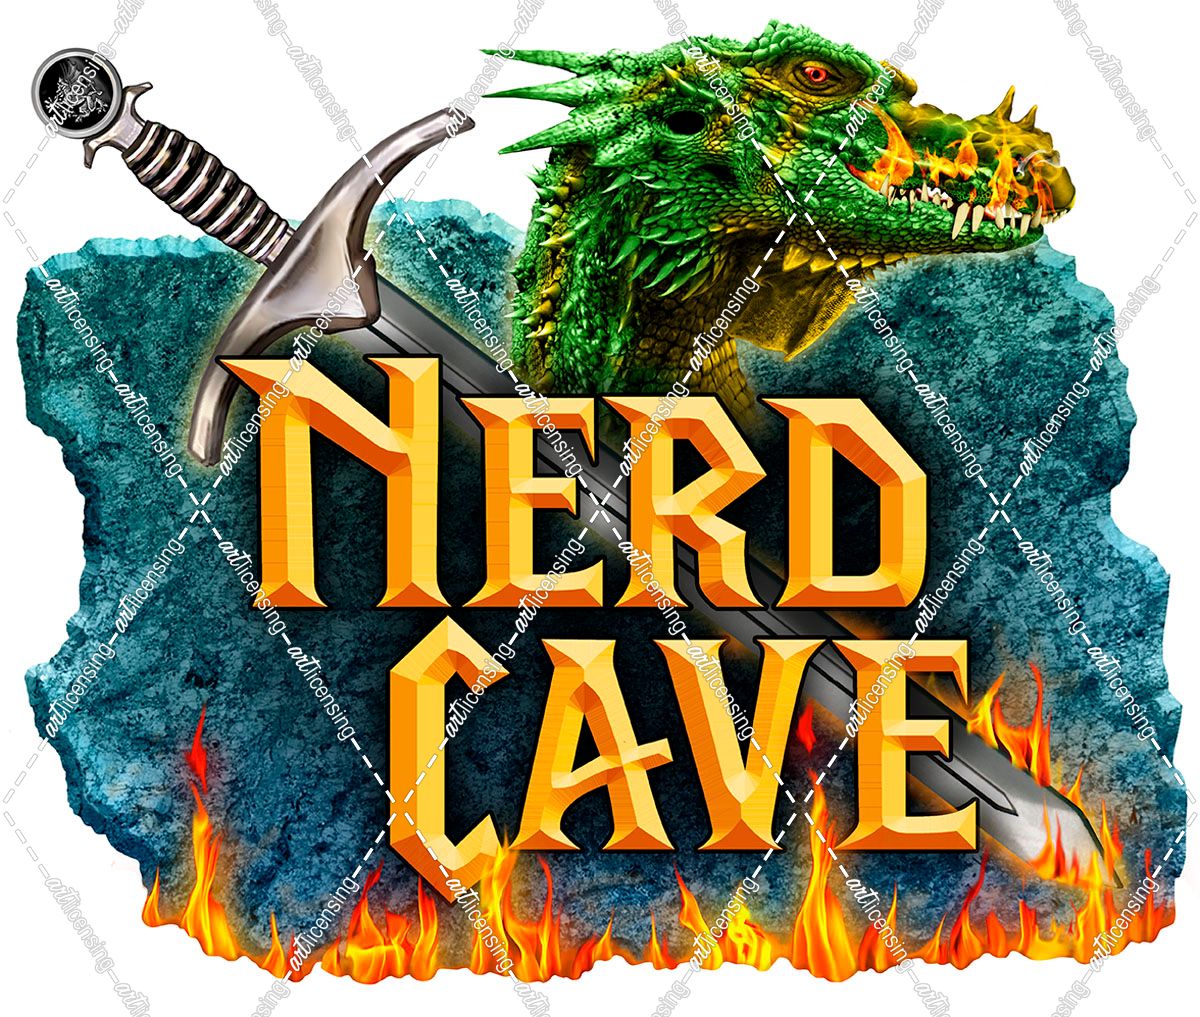 Nerd Cave Dragon